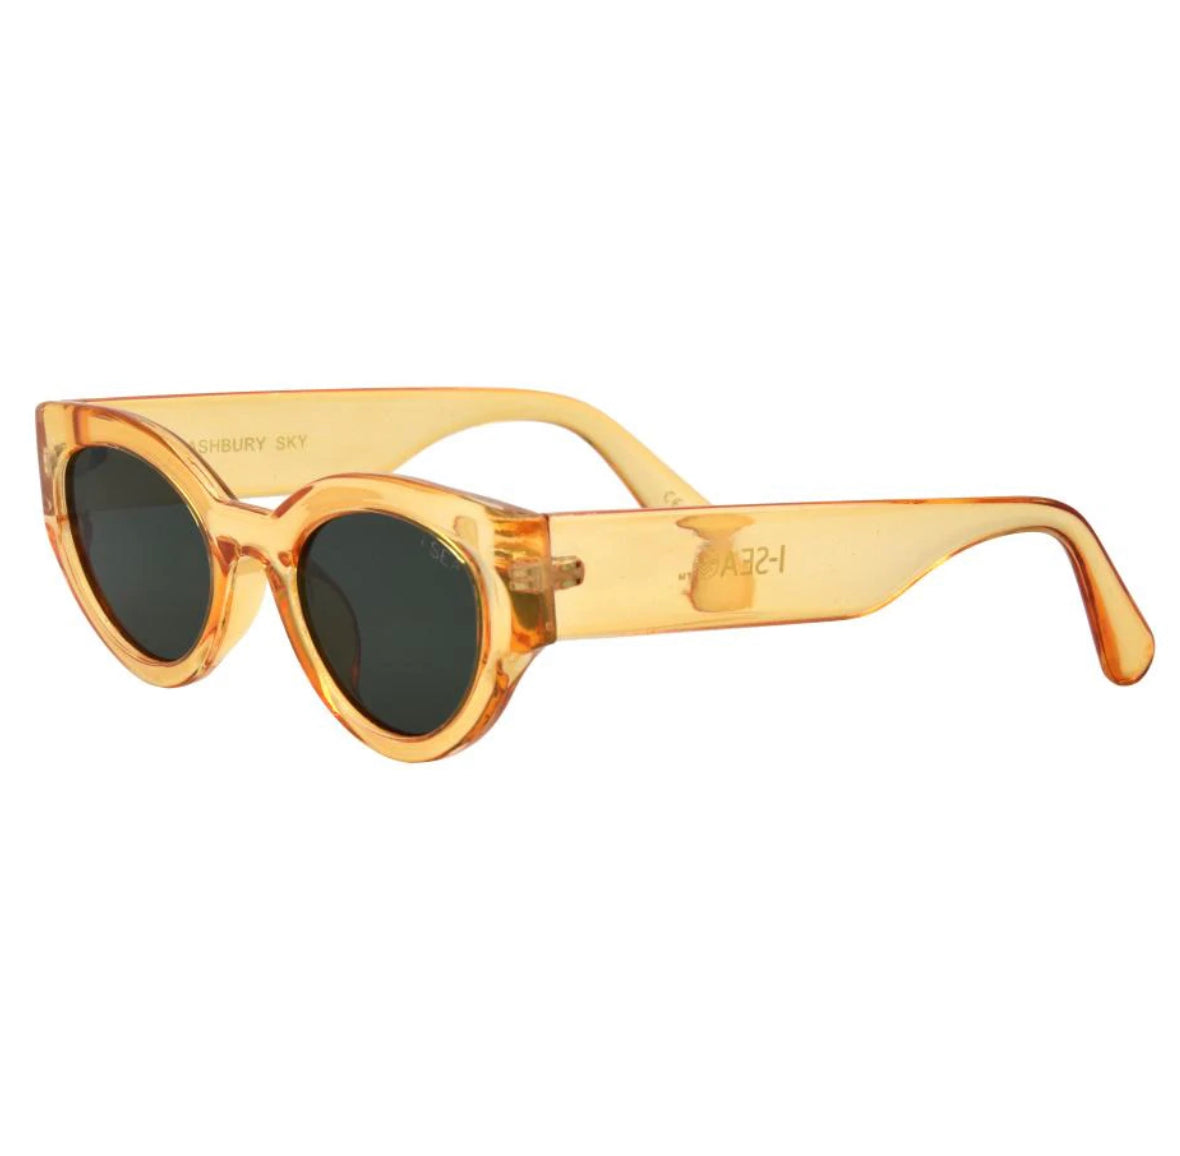 I-Sea ‘Ashbury Sky Sunglasses’